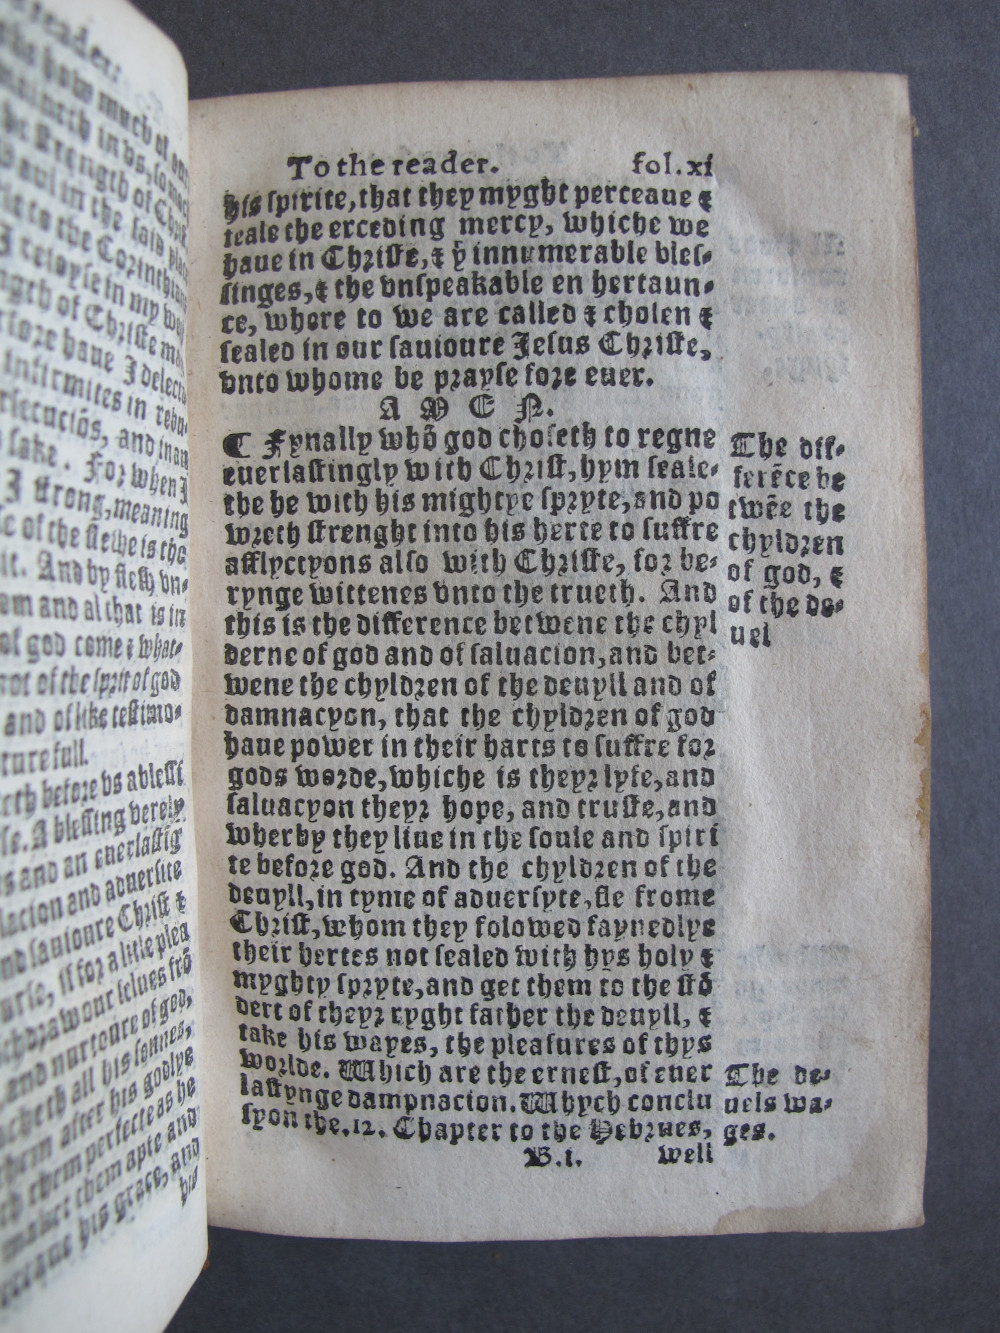 1 Folio B1 recto